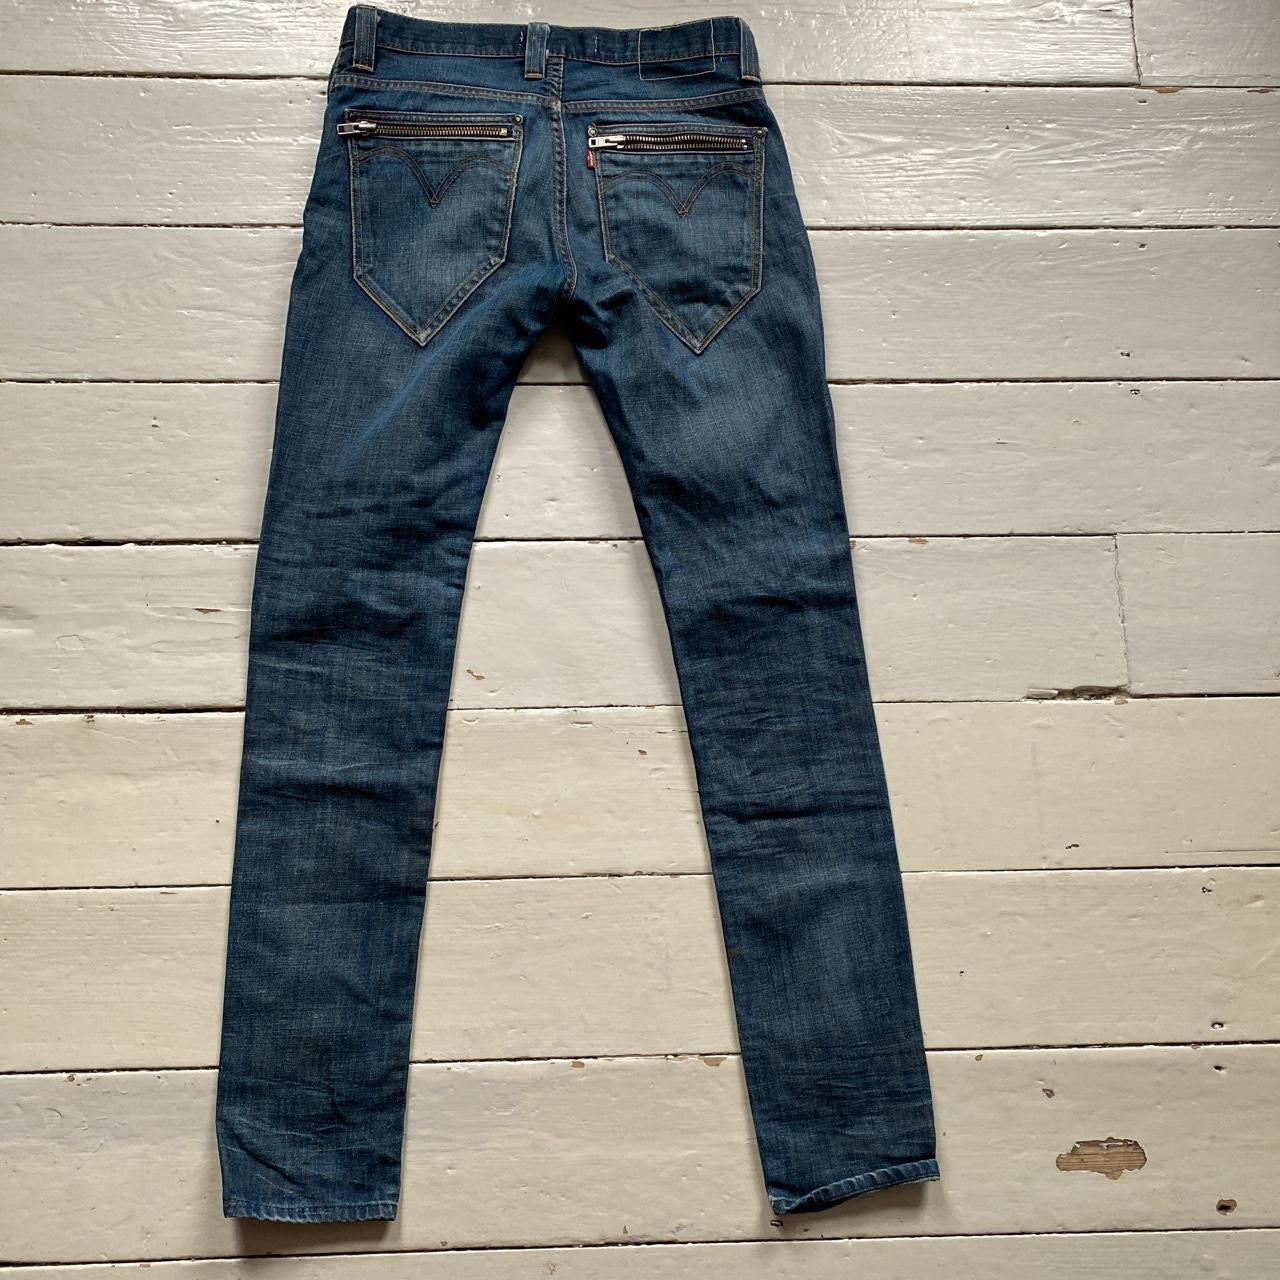 Levis 513 Skinny Jeans (33/34)